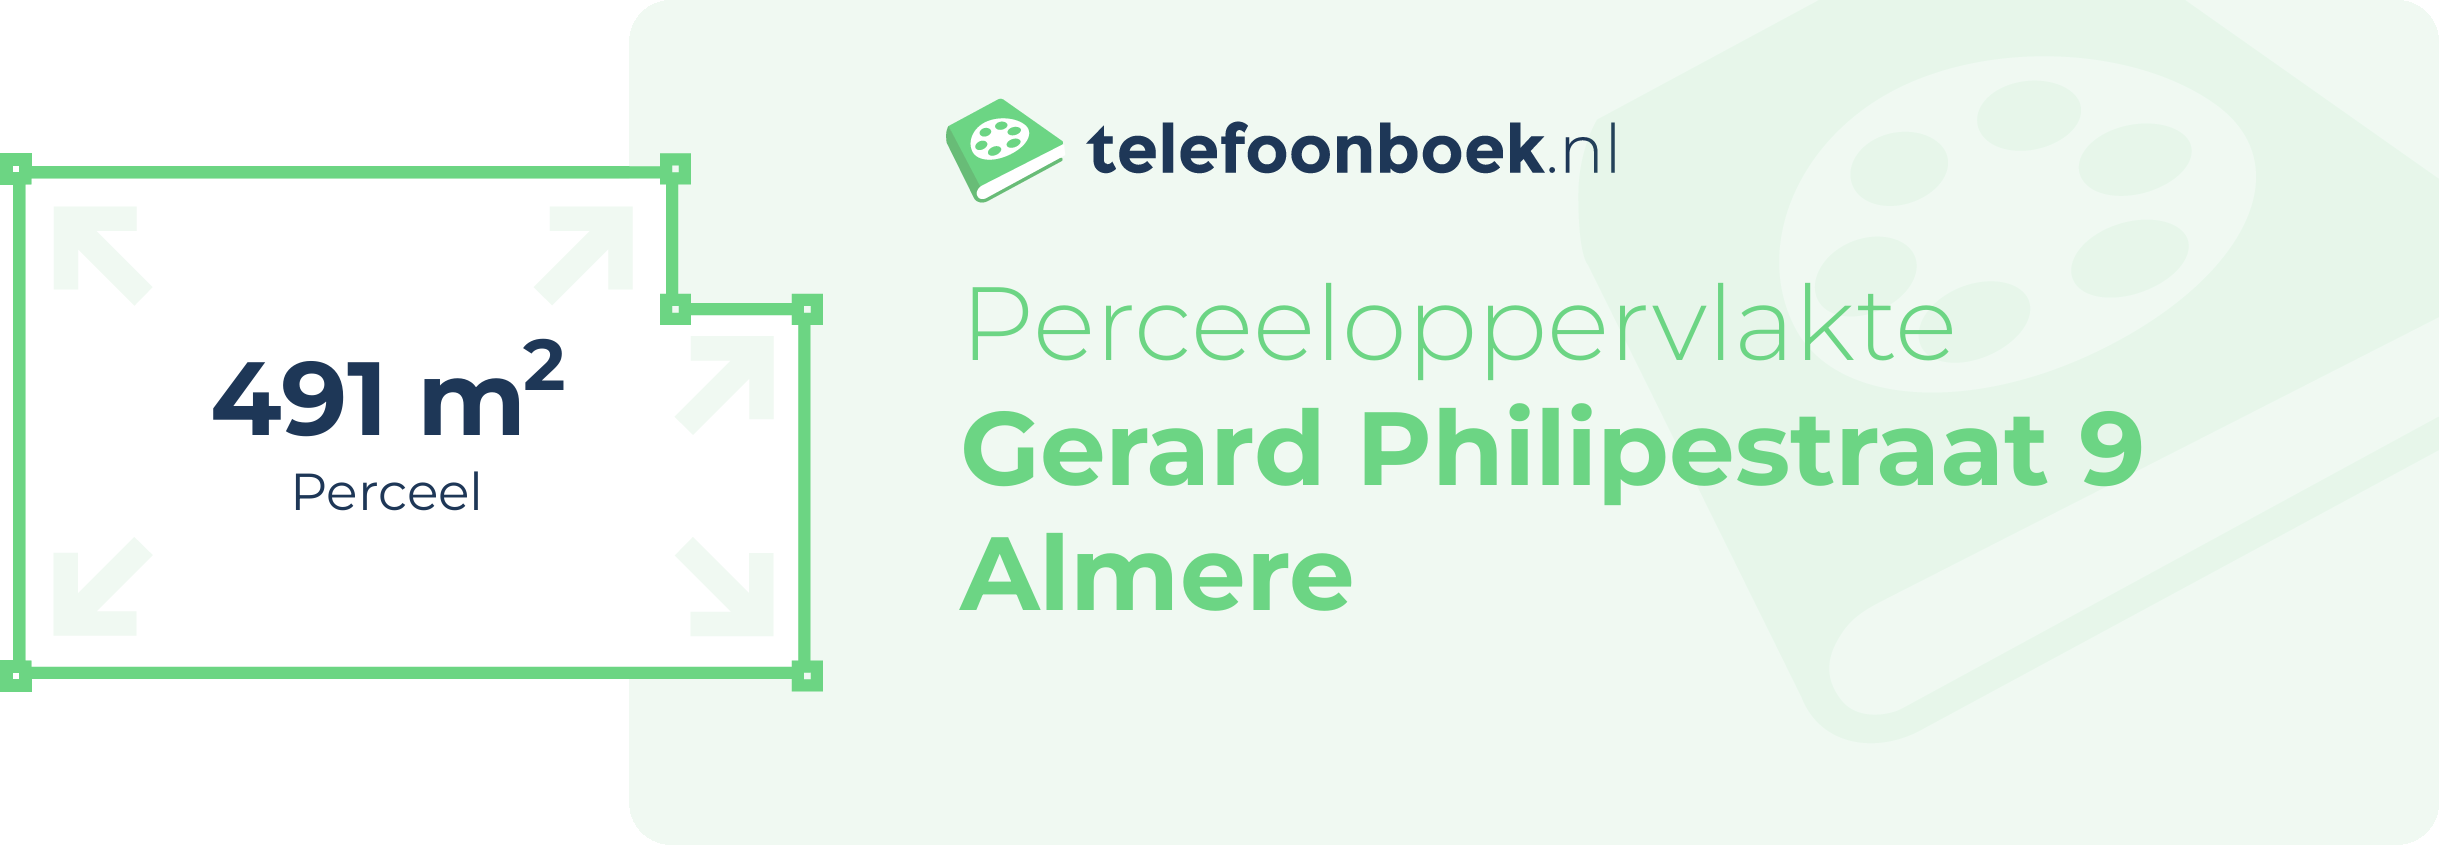 Perceeloppervlakte Gerard Philipestraat 9 Almere